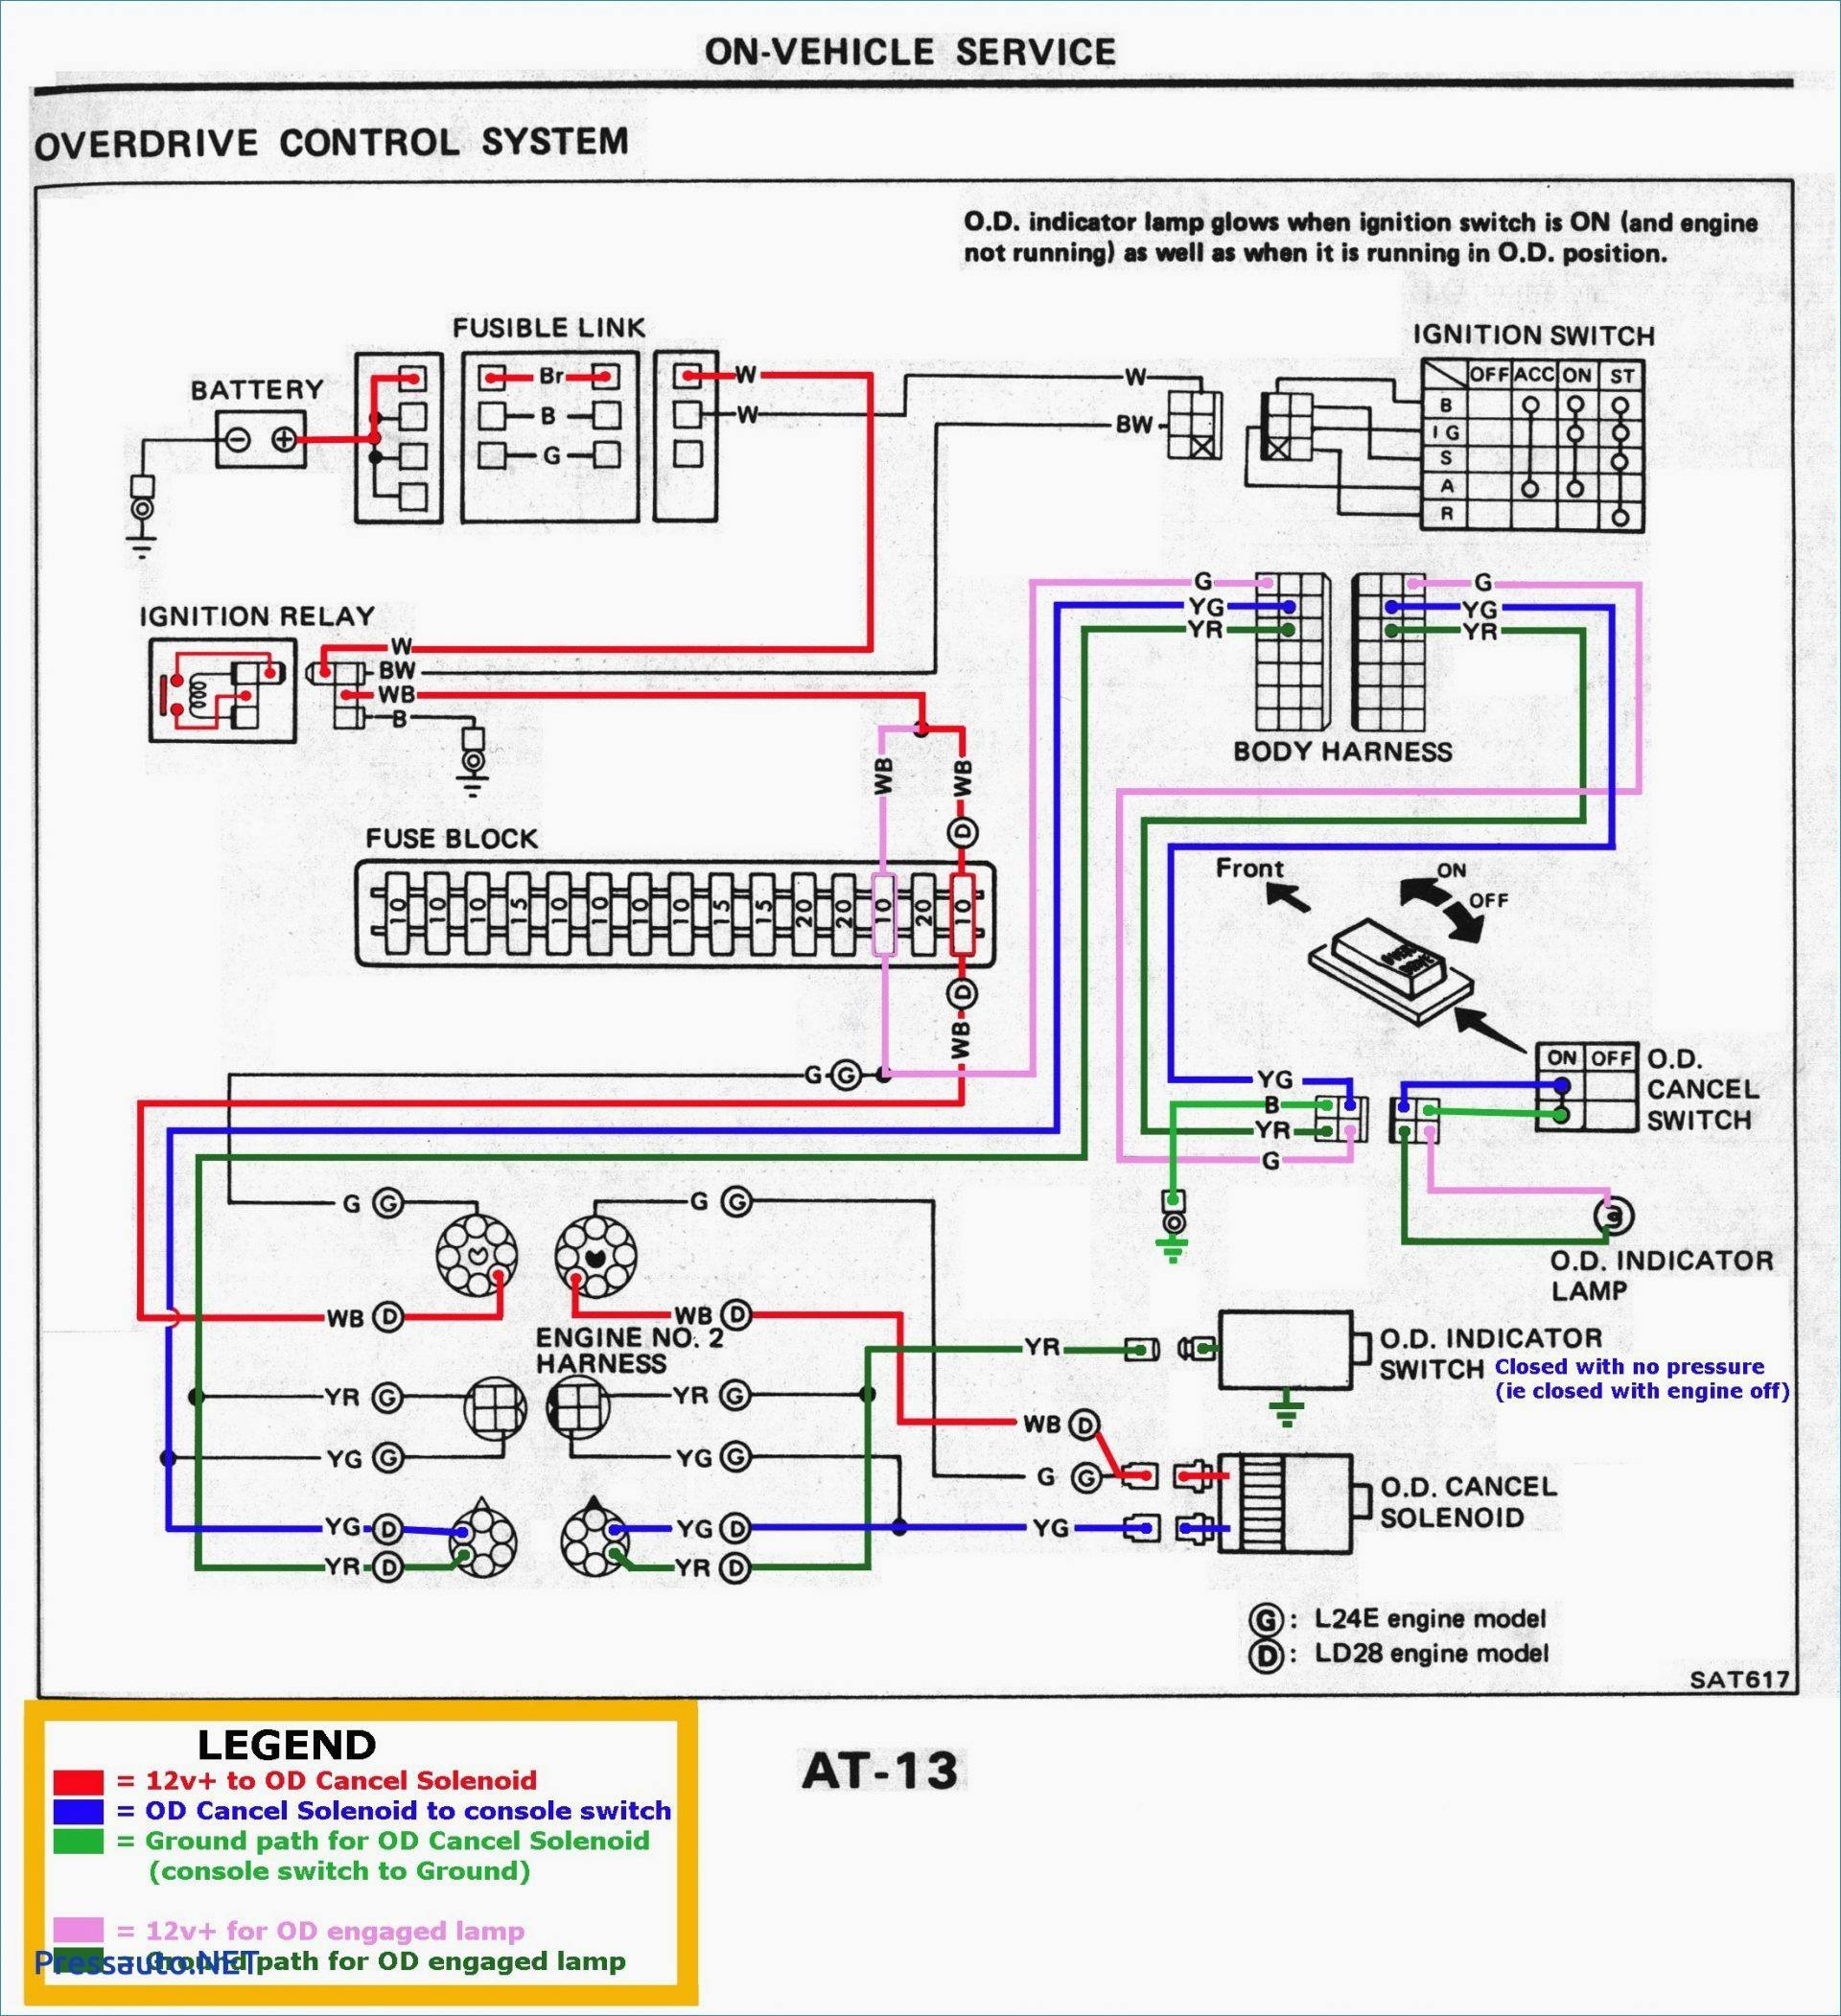 1995 Chevy Truck Tail Light Wiring Diagram - Wiring Diagram Data Oreo - Tail Light Wiring Diagram 1995 Chevy Truck